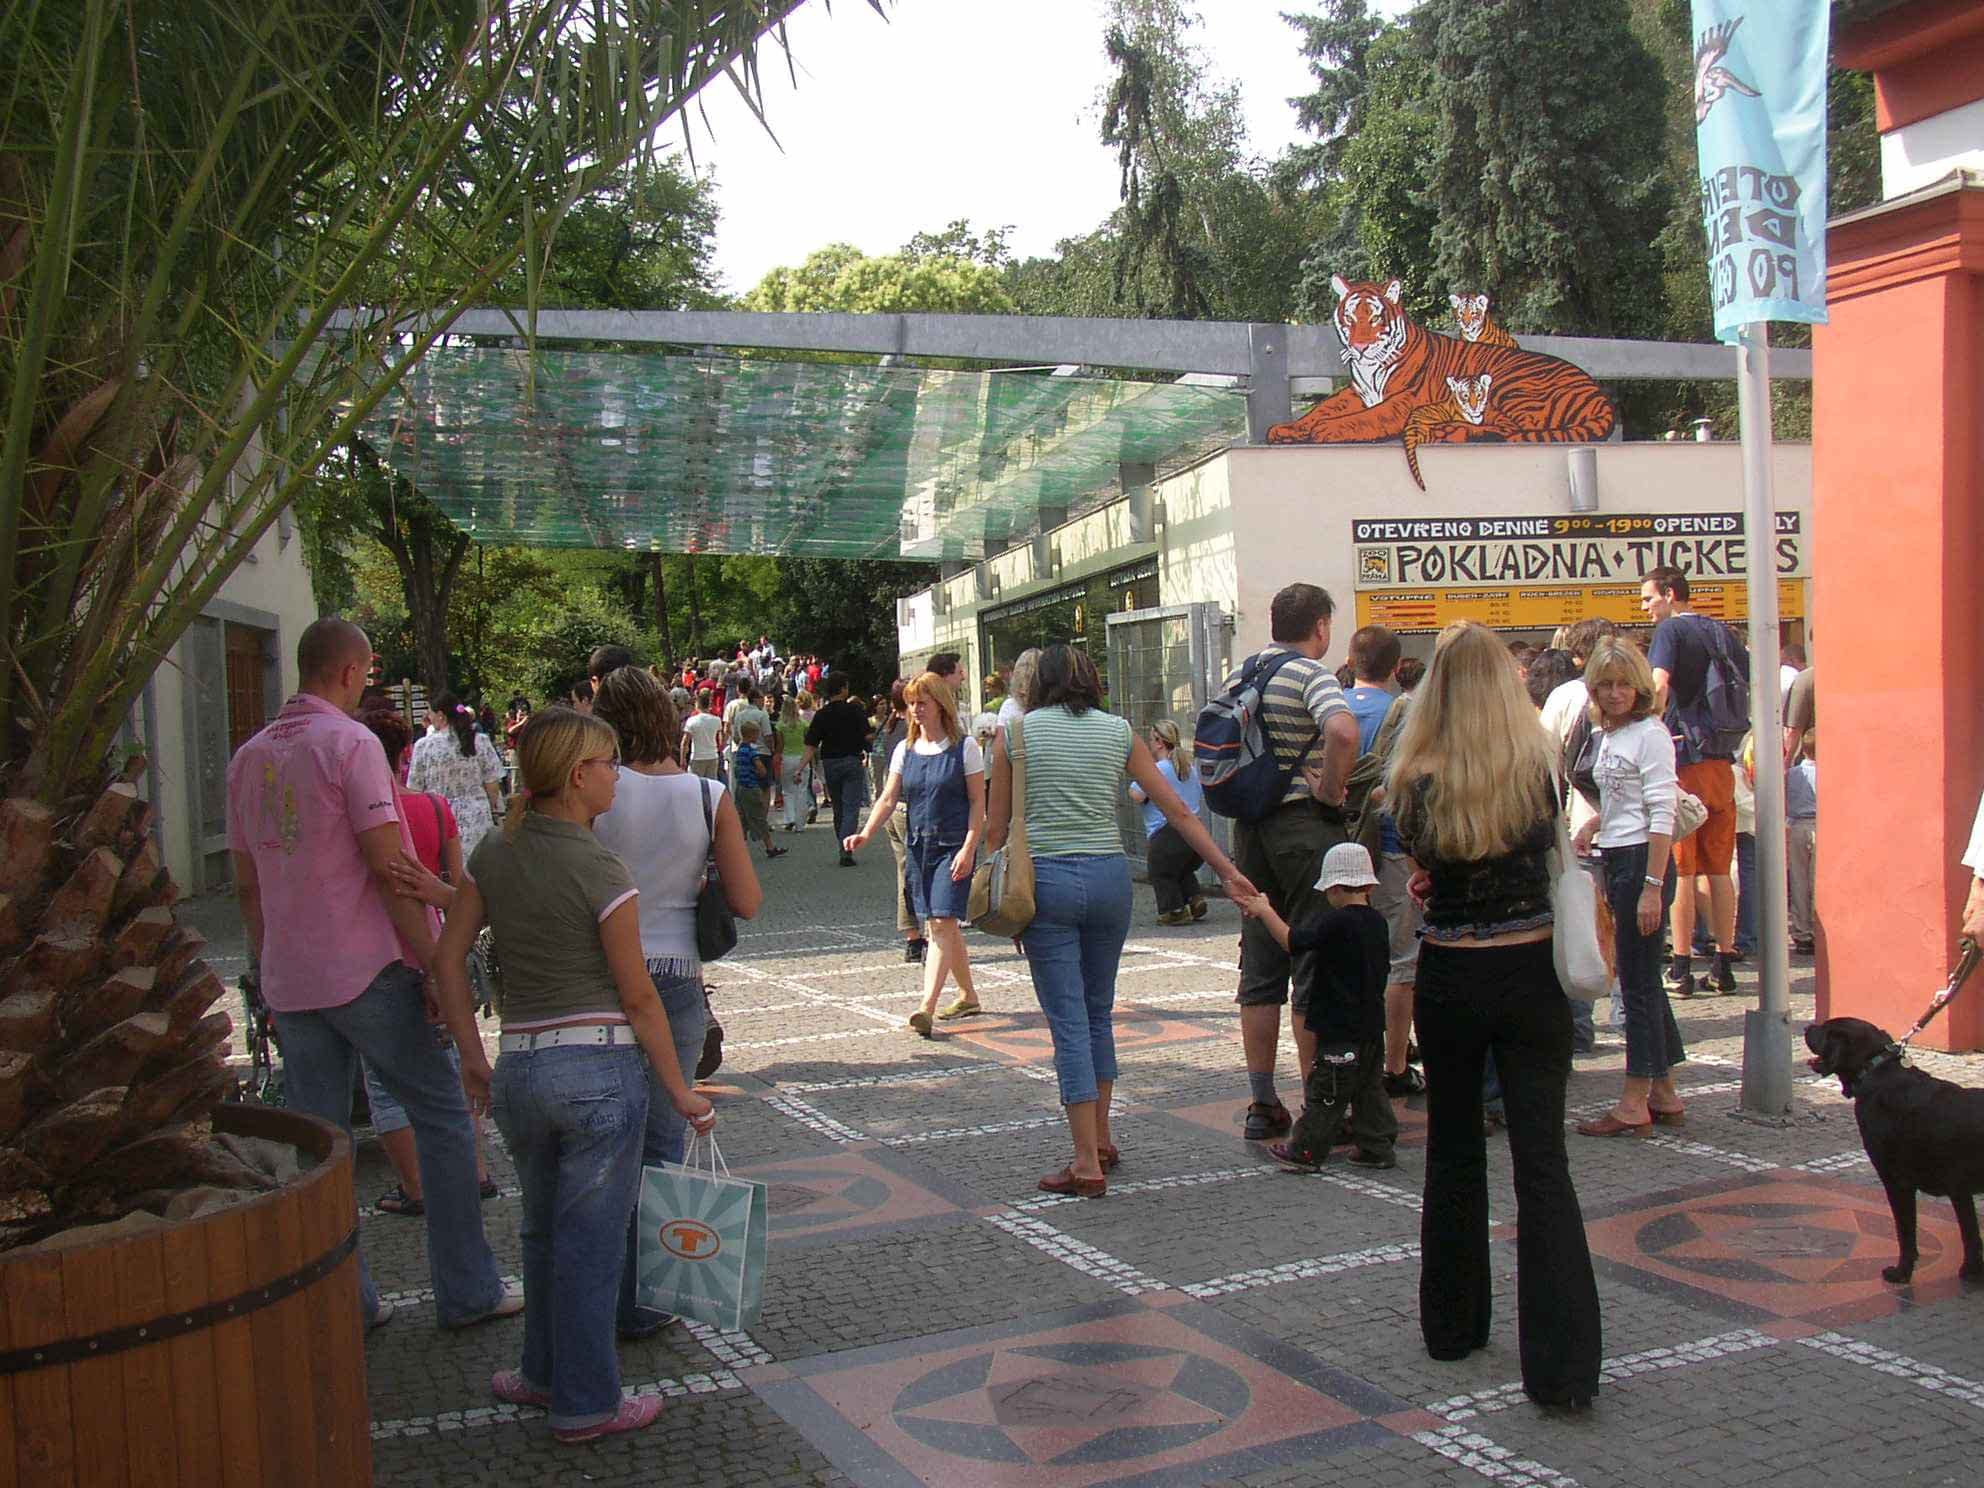 Main entrance of the Prague Zoo